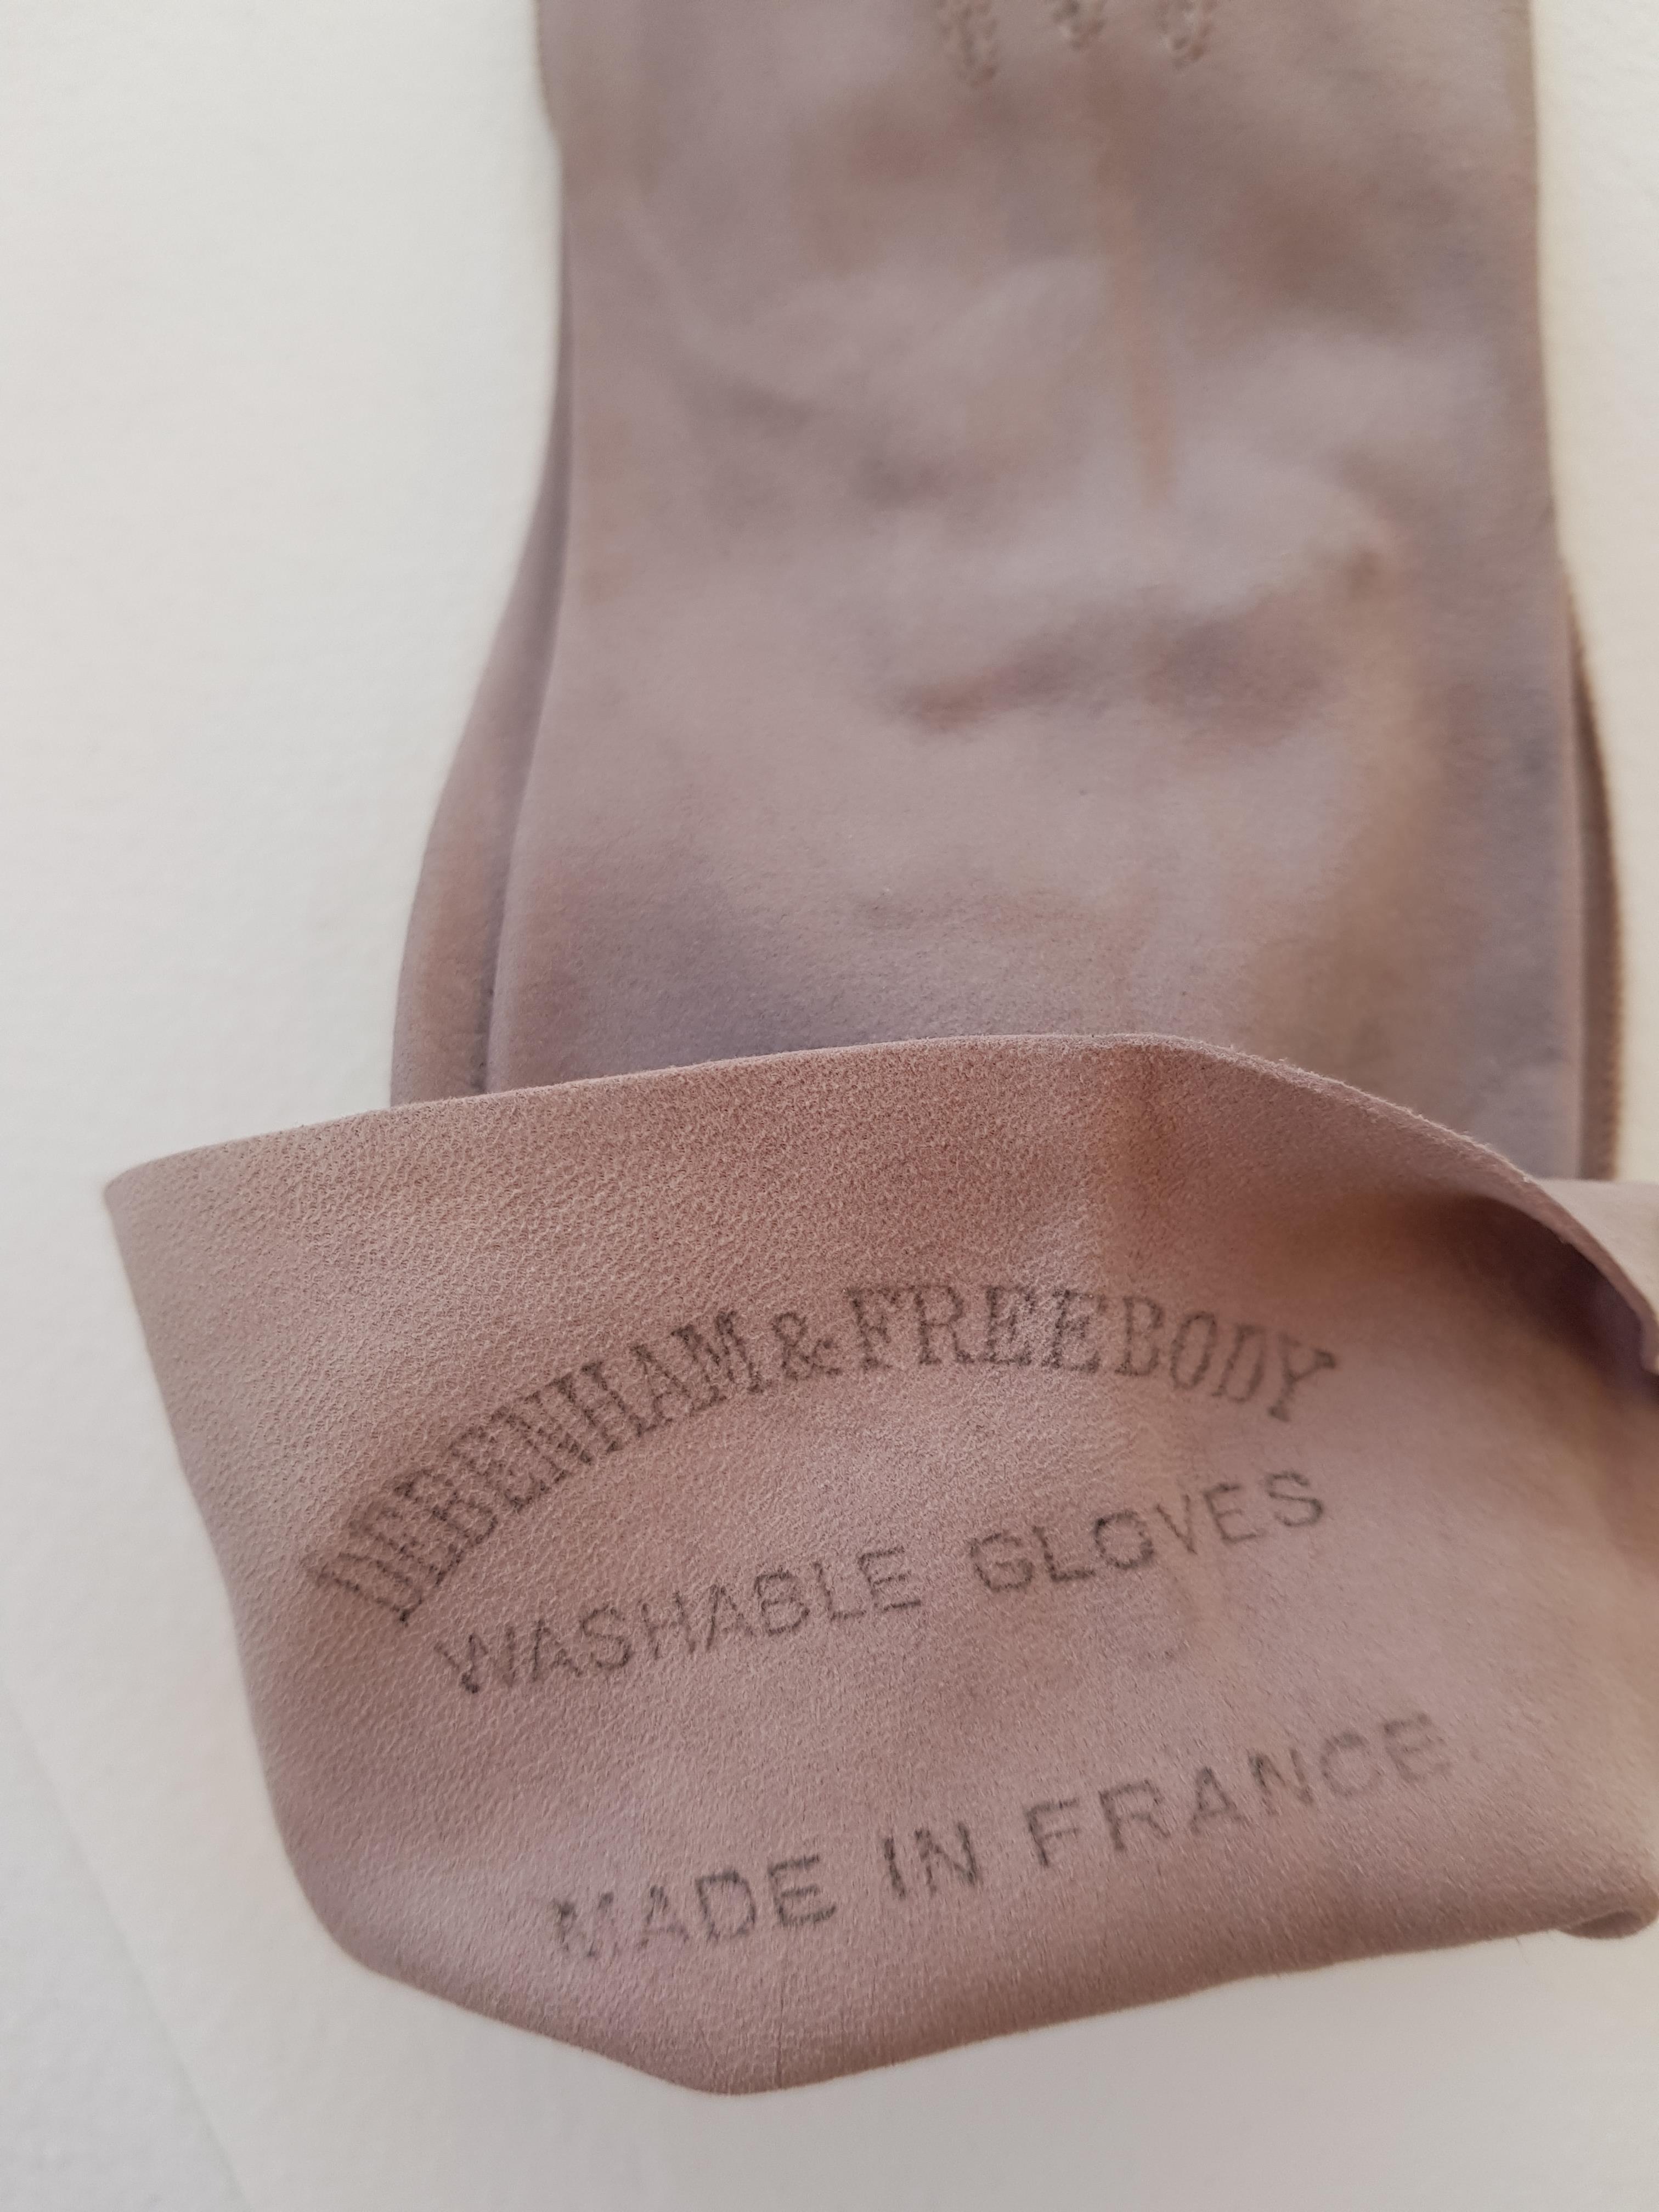 Vintage Ladies Leather Gloves - Image 3 of 3